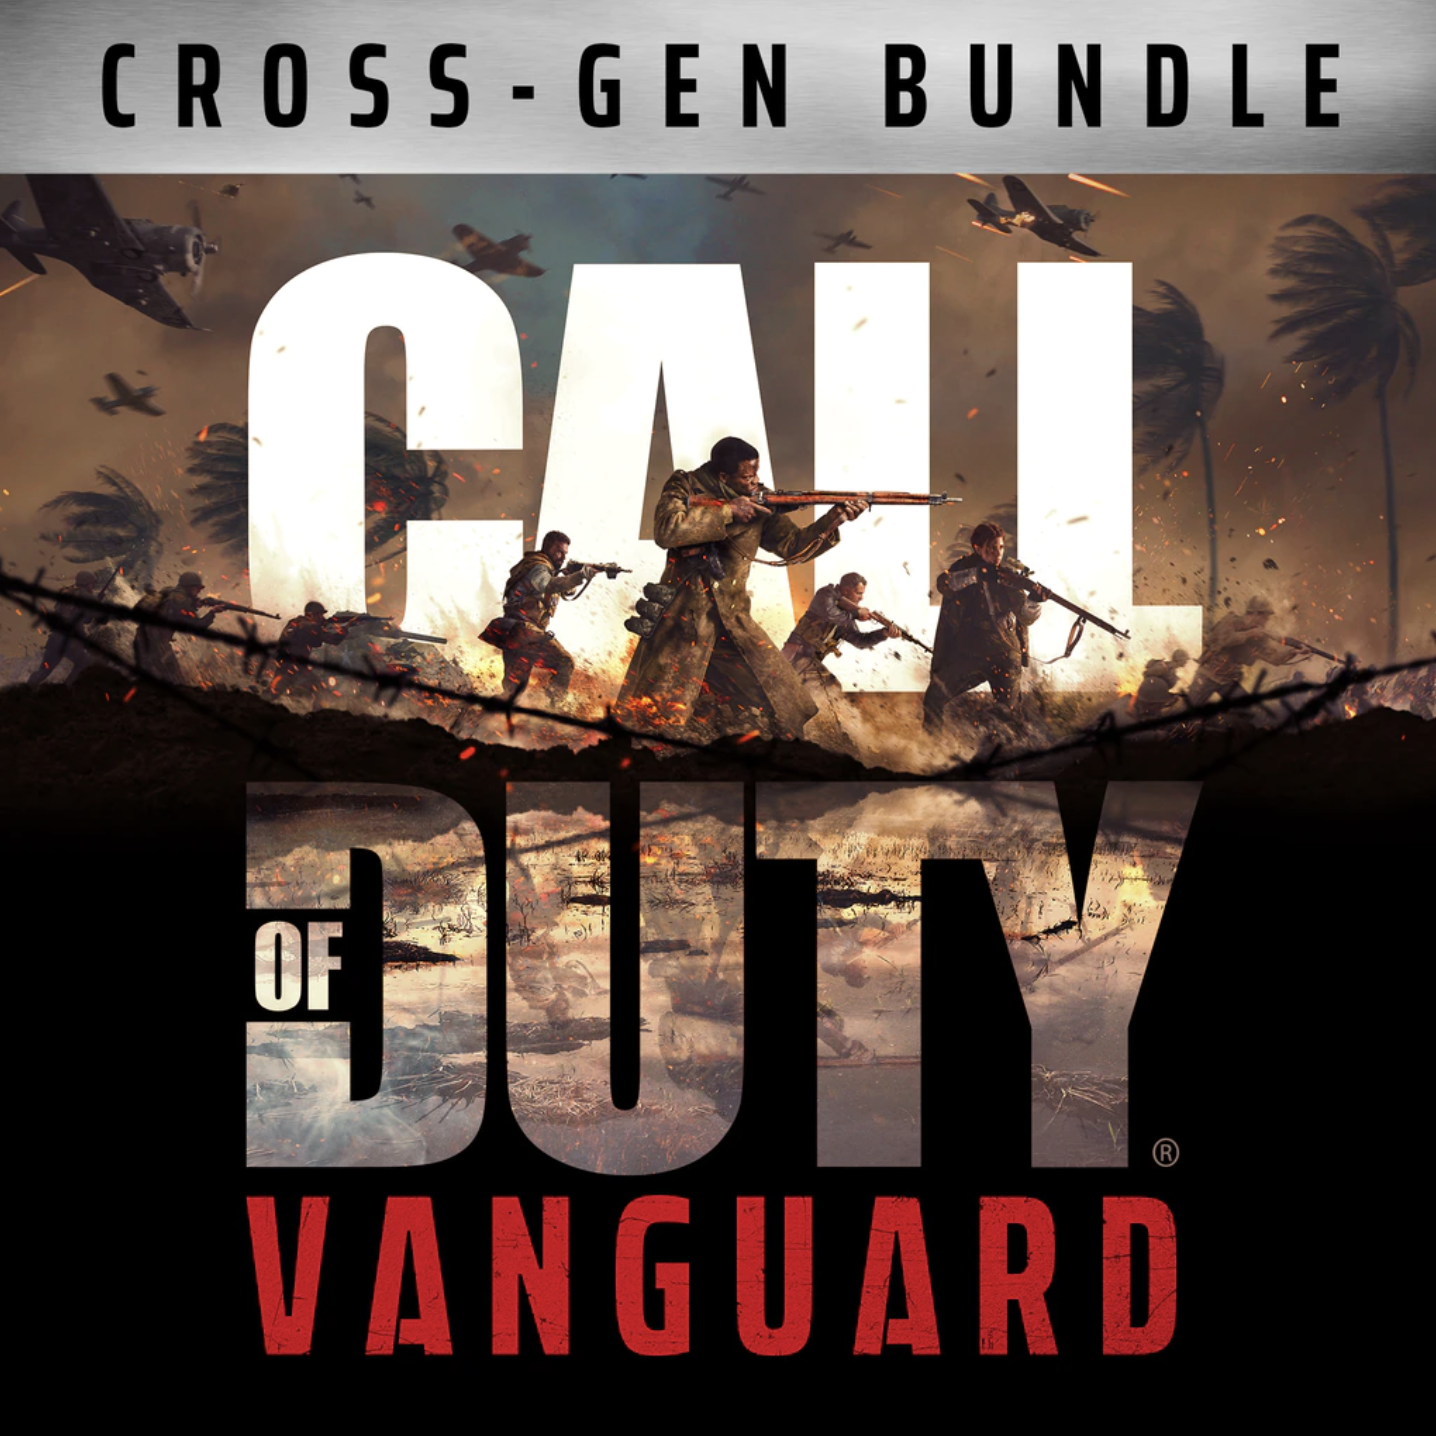 Call of Duty: Vanguard - PS4 & PS5 games | PlayStation (US)